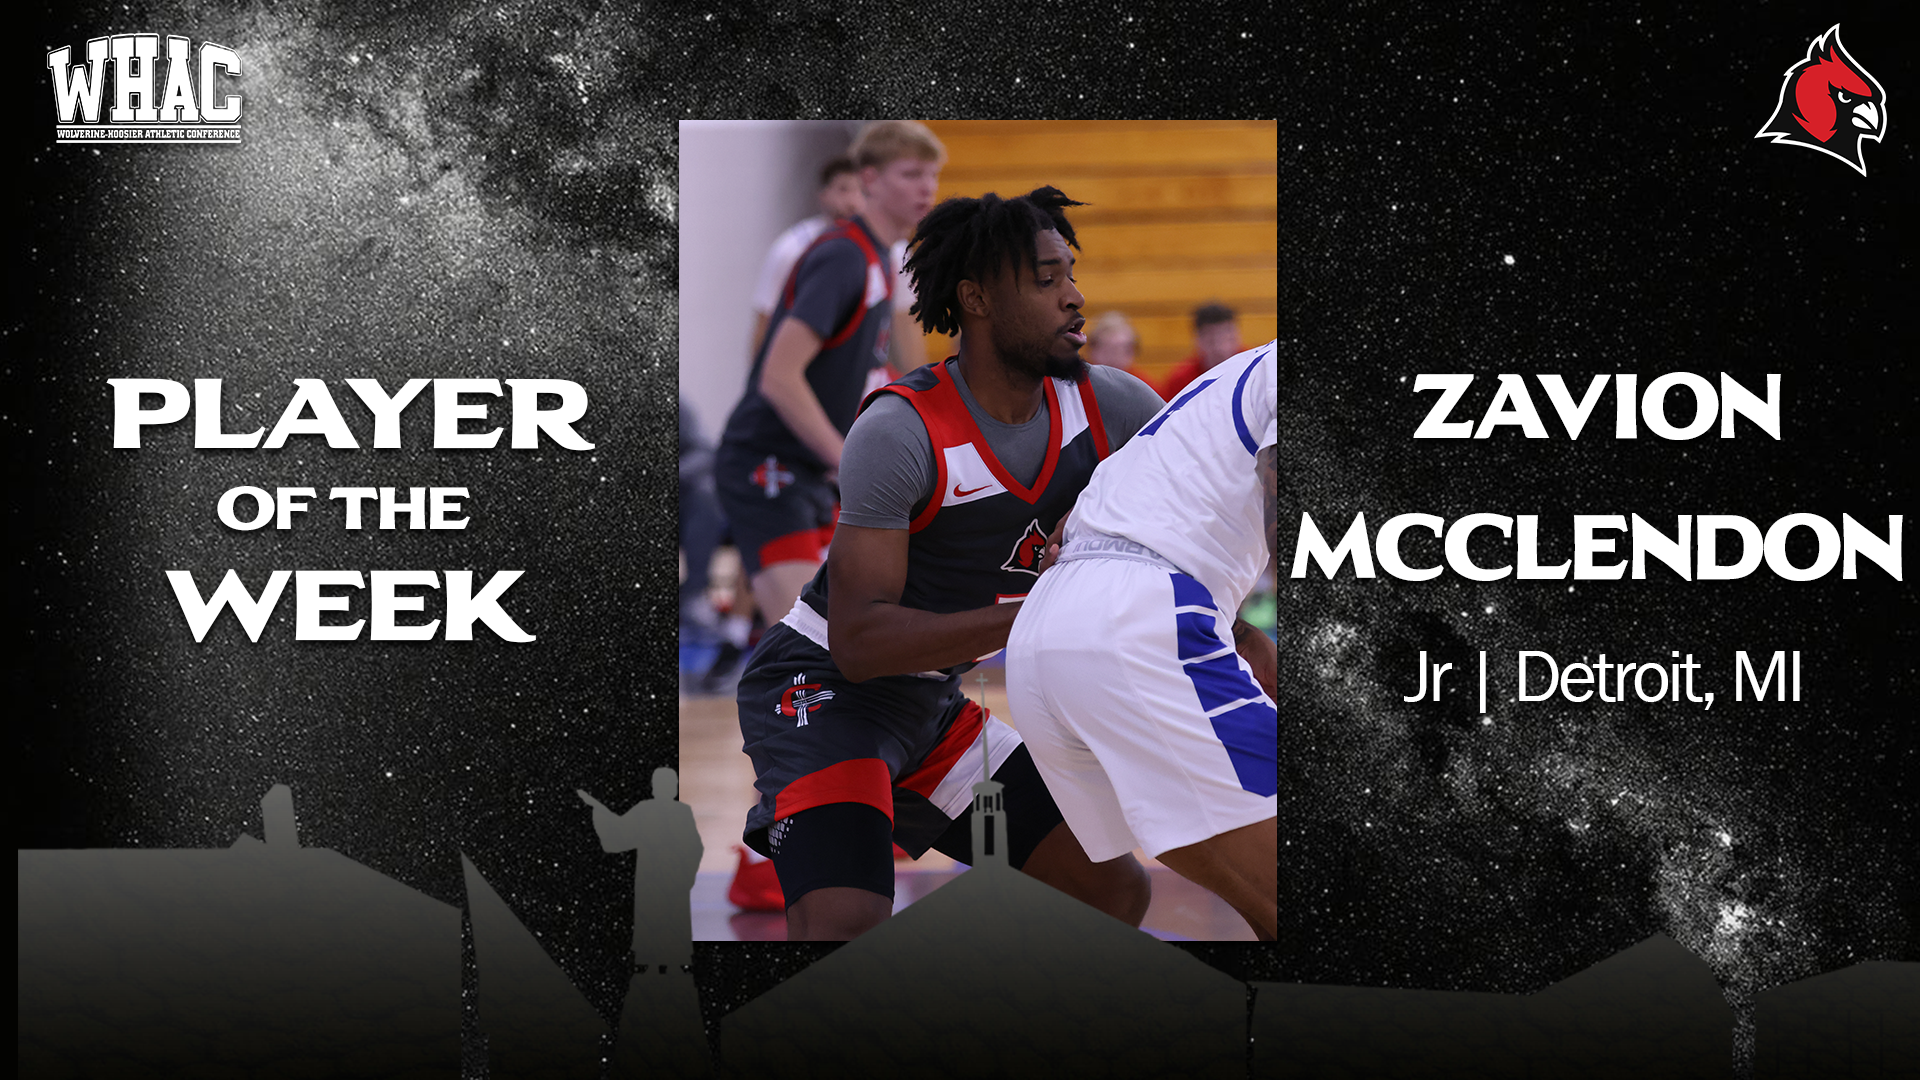 Zavion McClendon earns WHAC and NCCAA Basketball Player of the Week